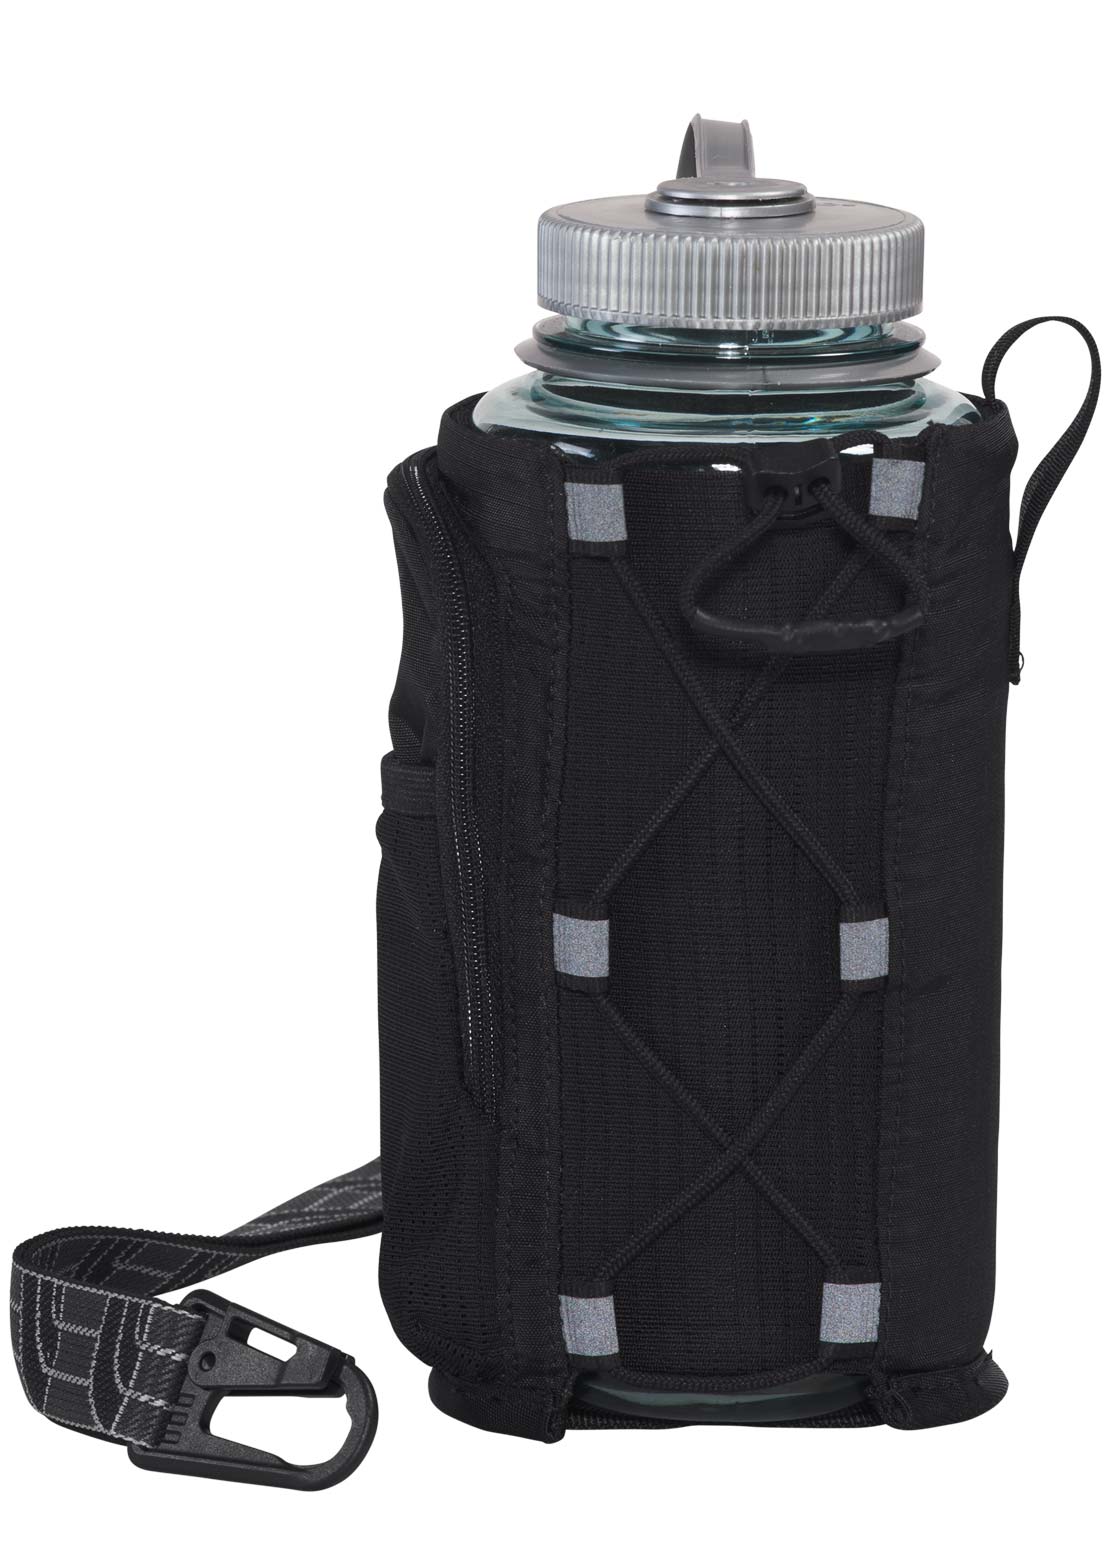 The North Face Borealis Water Bottle Holder TNF Black/TNF Black